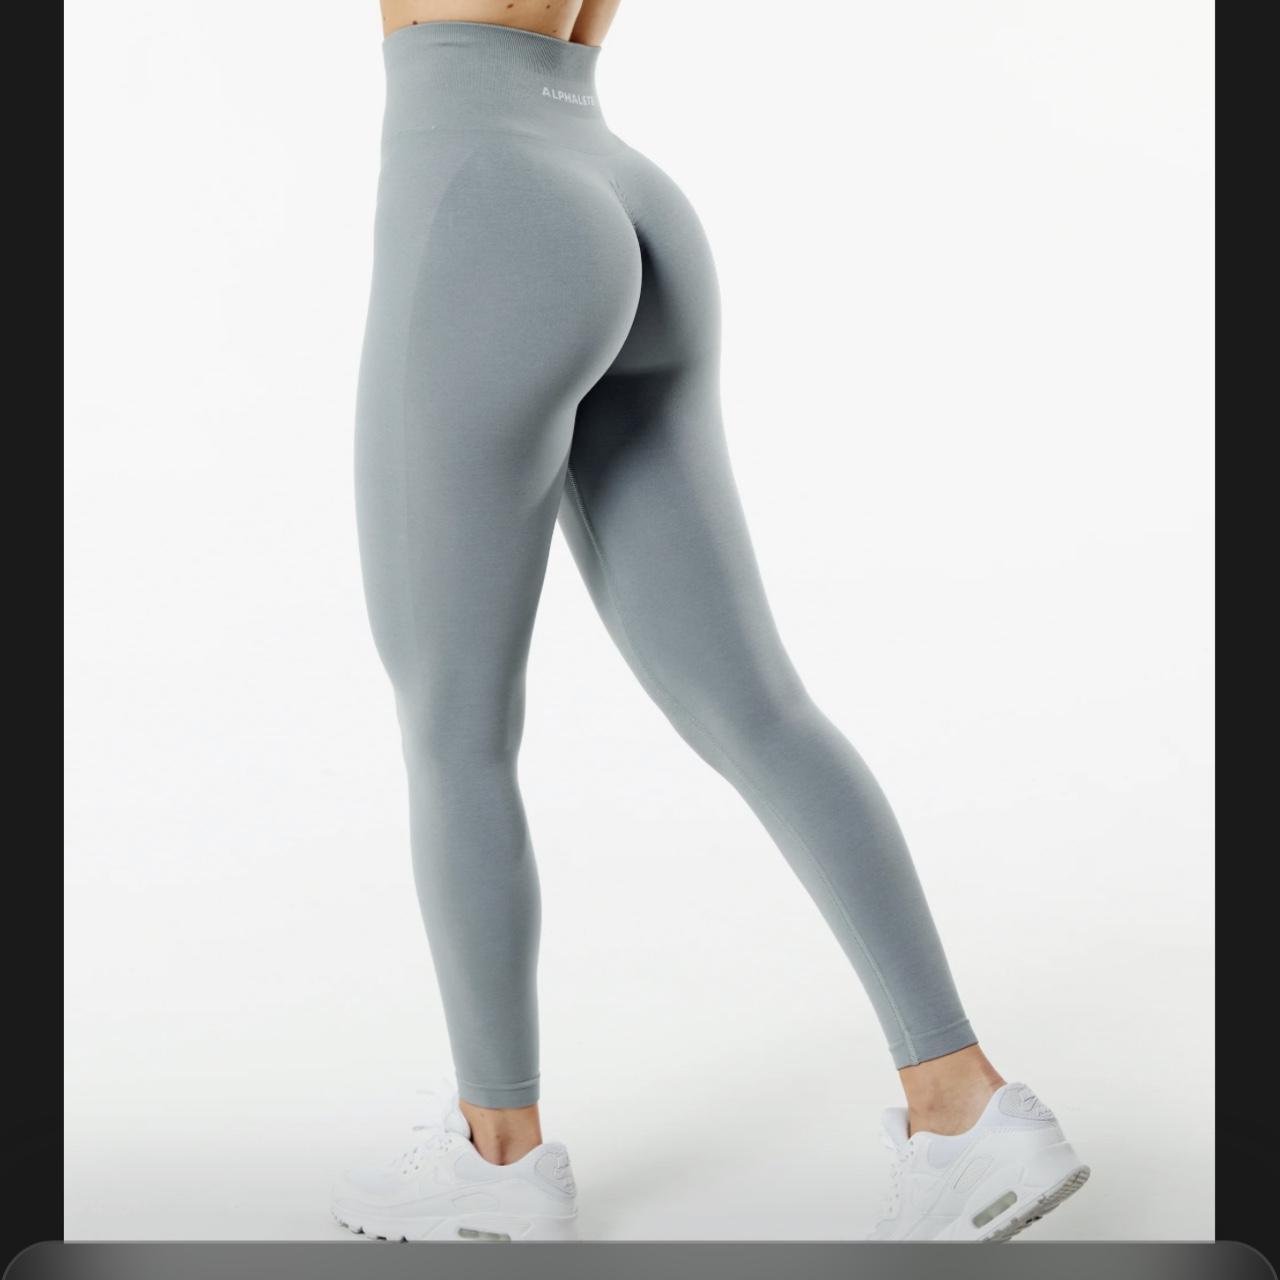 Alphalete amplify leggings , Sold out online , Size xs